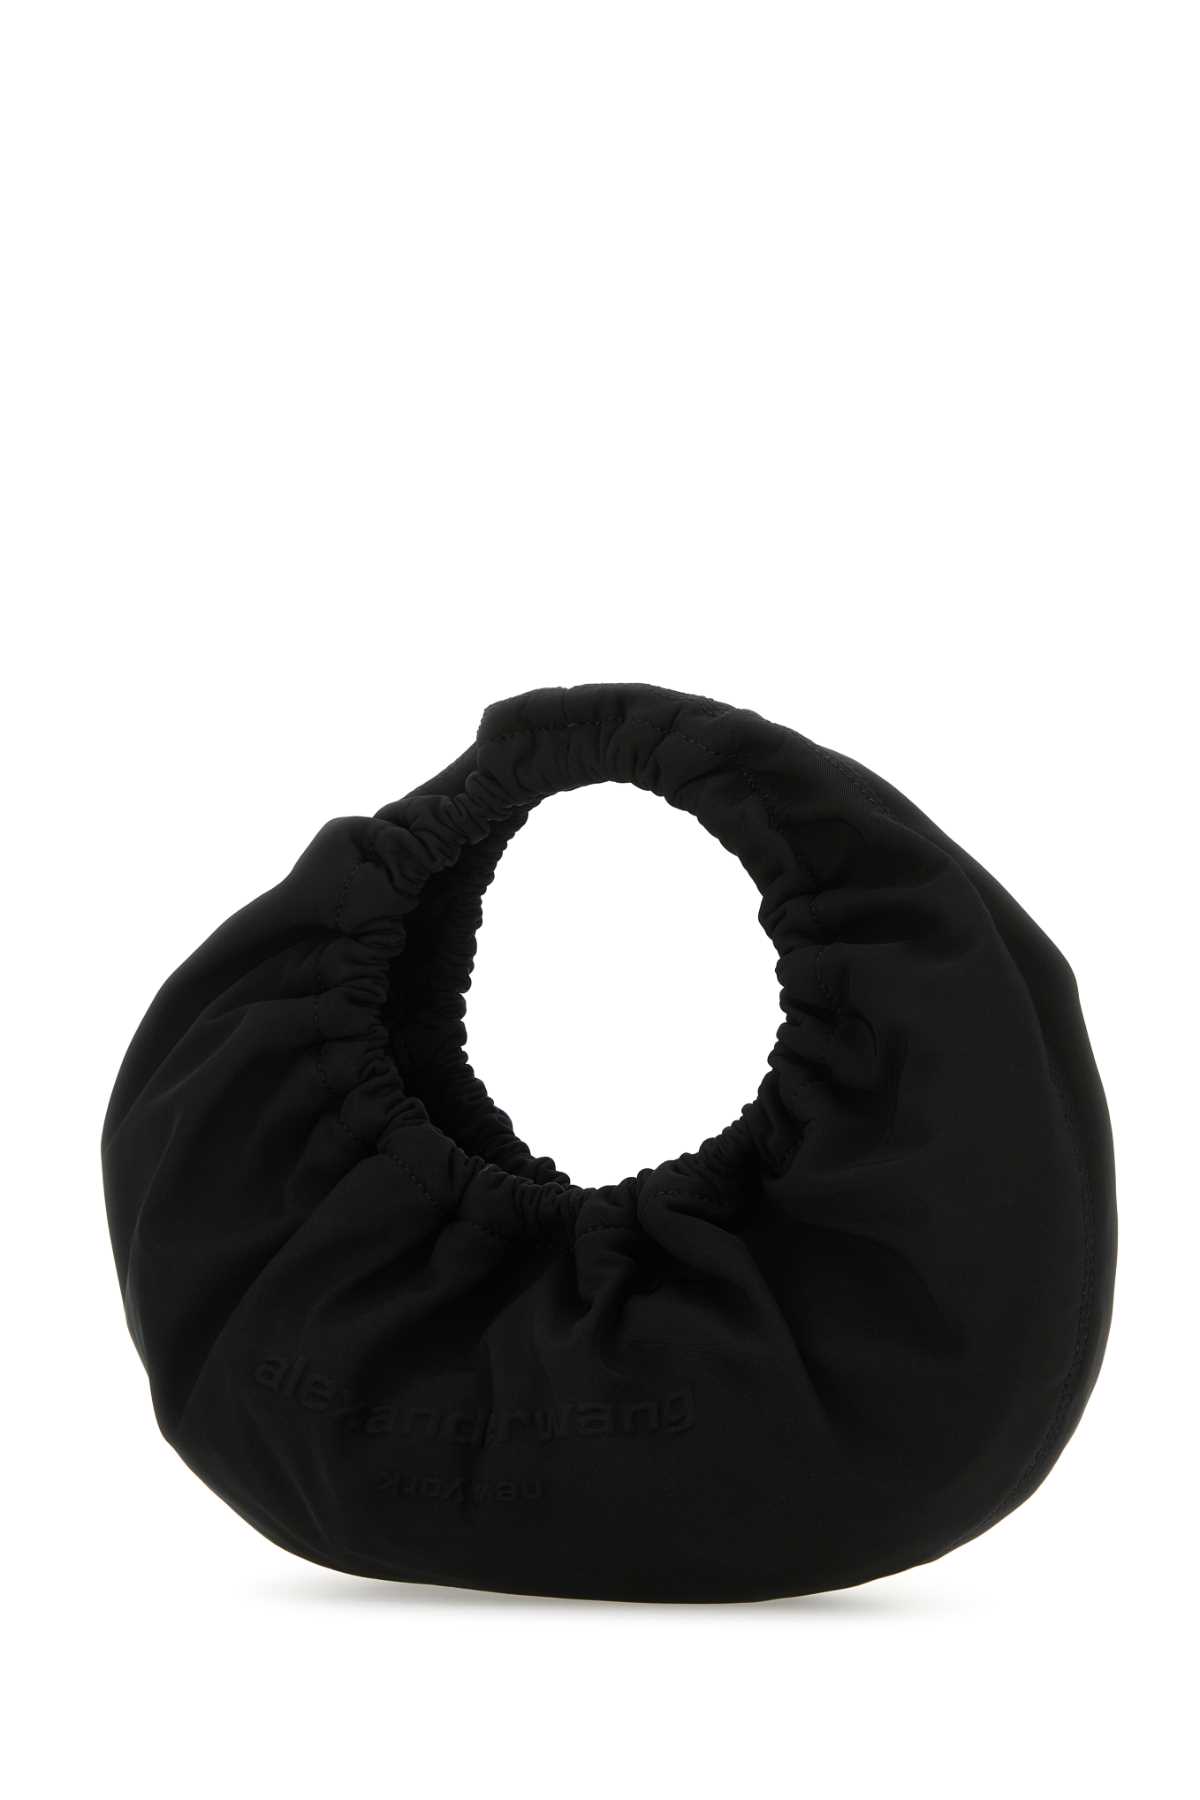 Alexander Wang Black Fabric Crescent Small Handbag